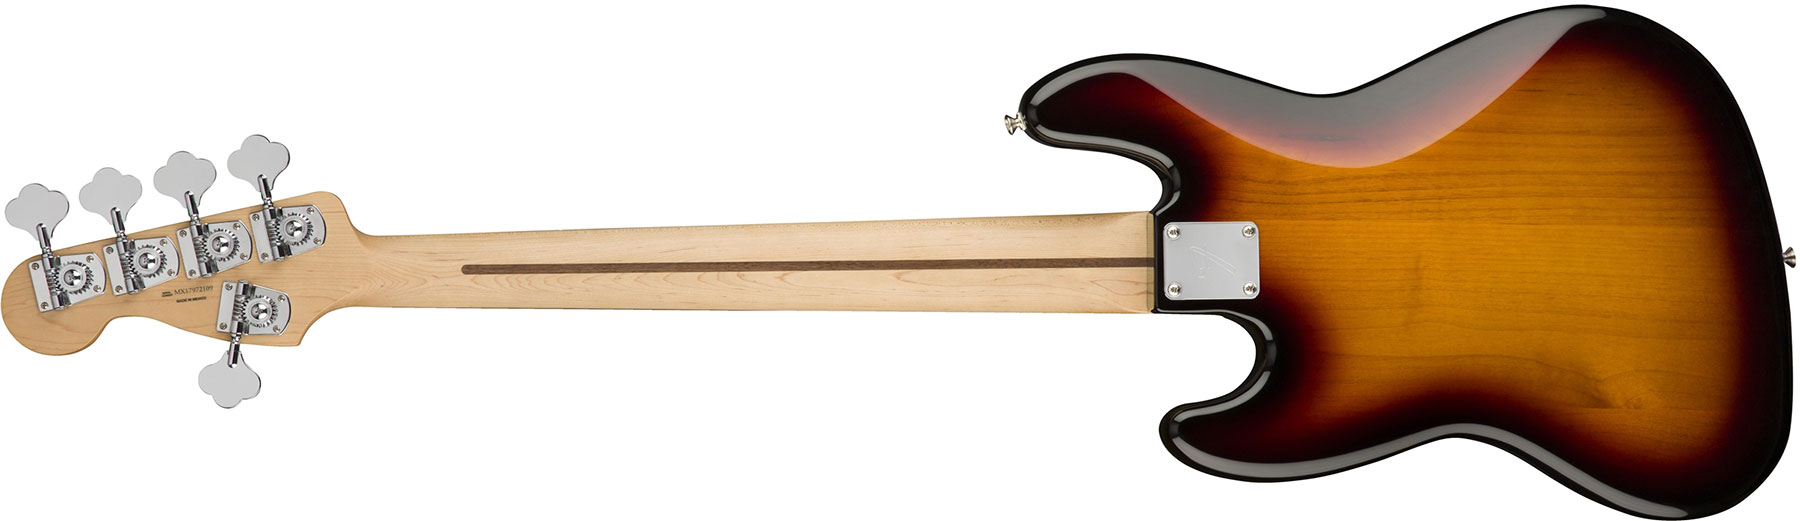 Fender Jazz Bass Player V 5-cordes Mex Pf - 3-color Sunburst - Basse Électrique Solid Body - Variation 1